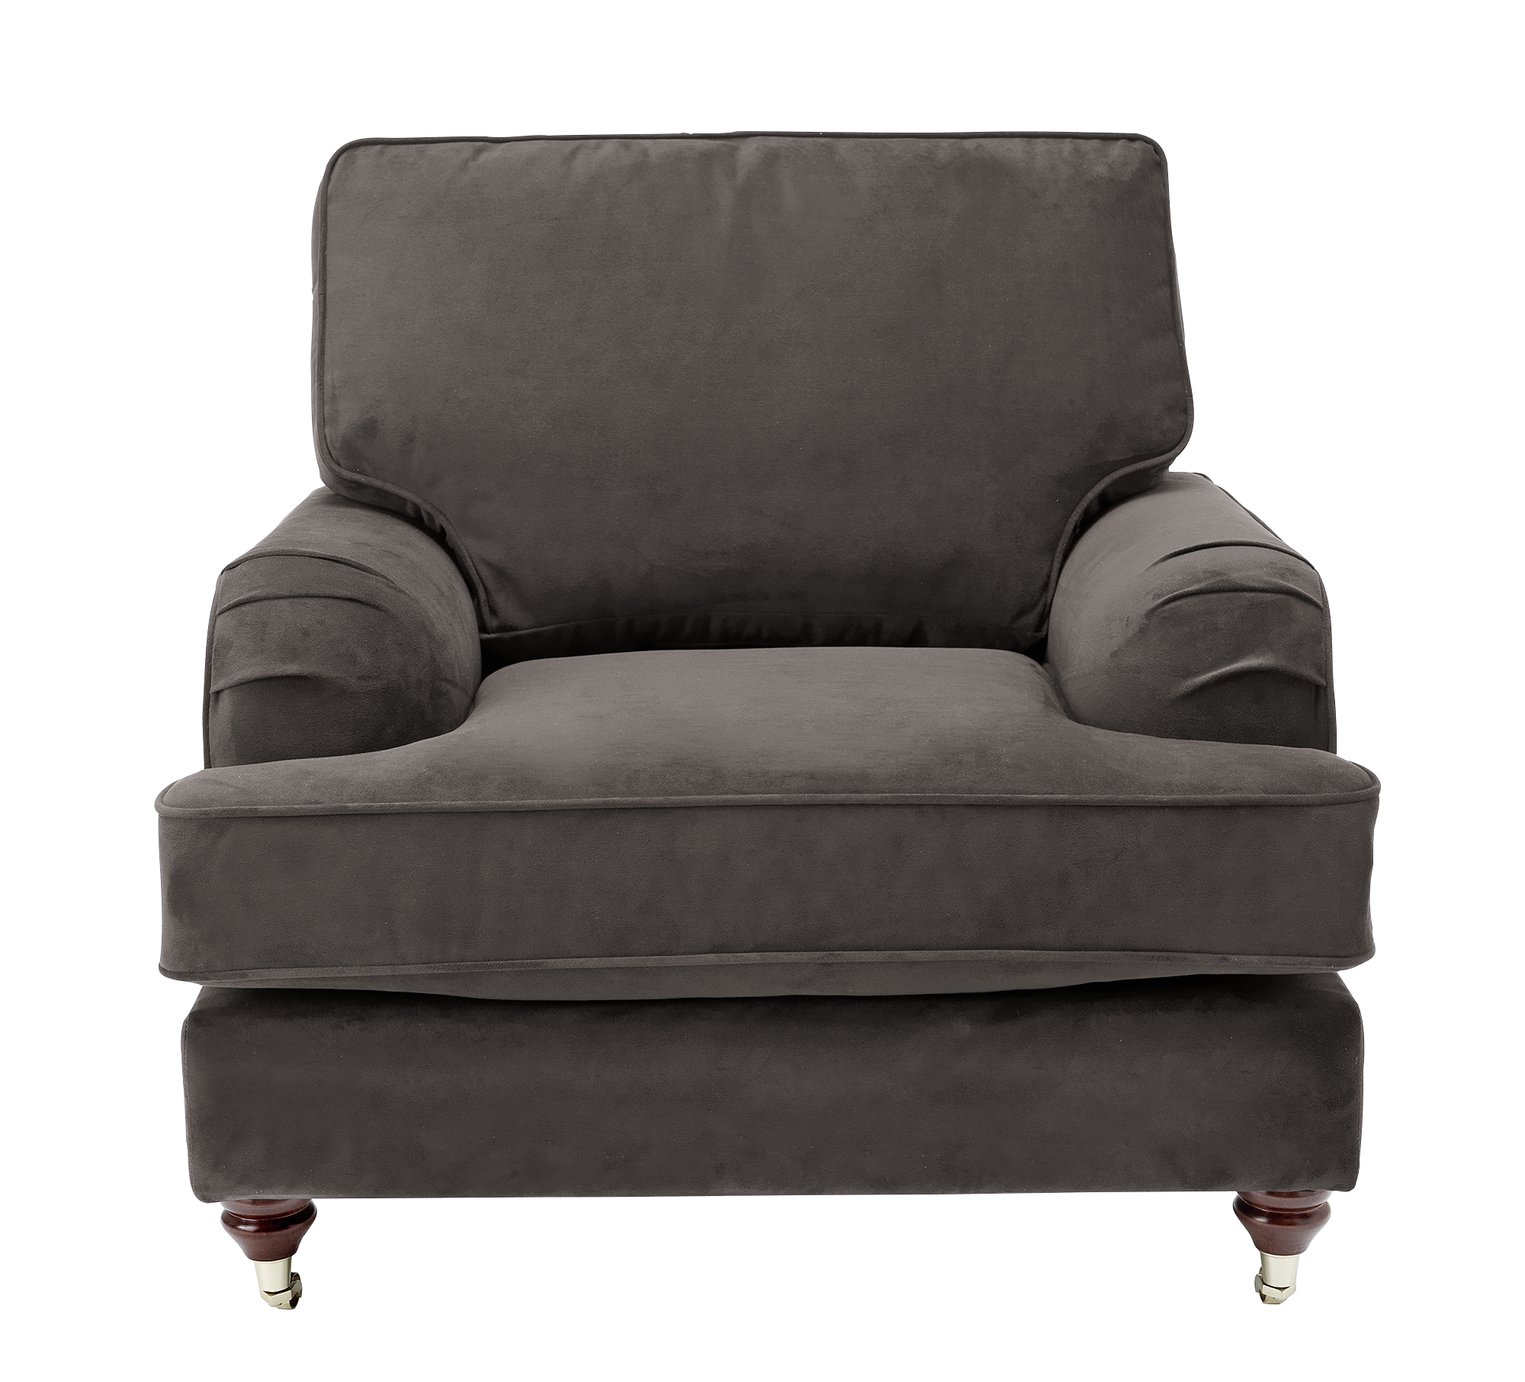 Argos Home Abberton Velvet Chair Reviews